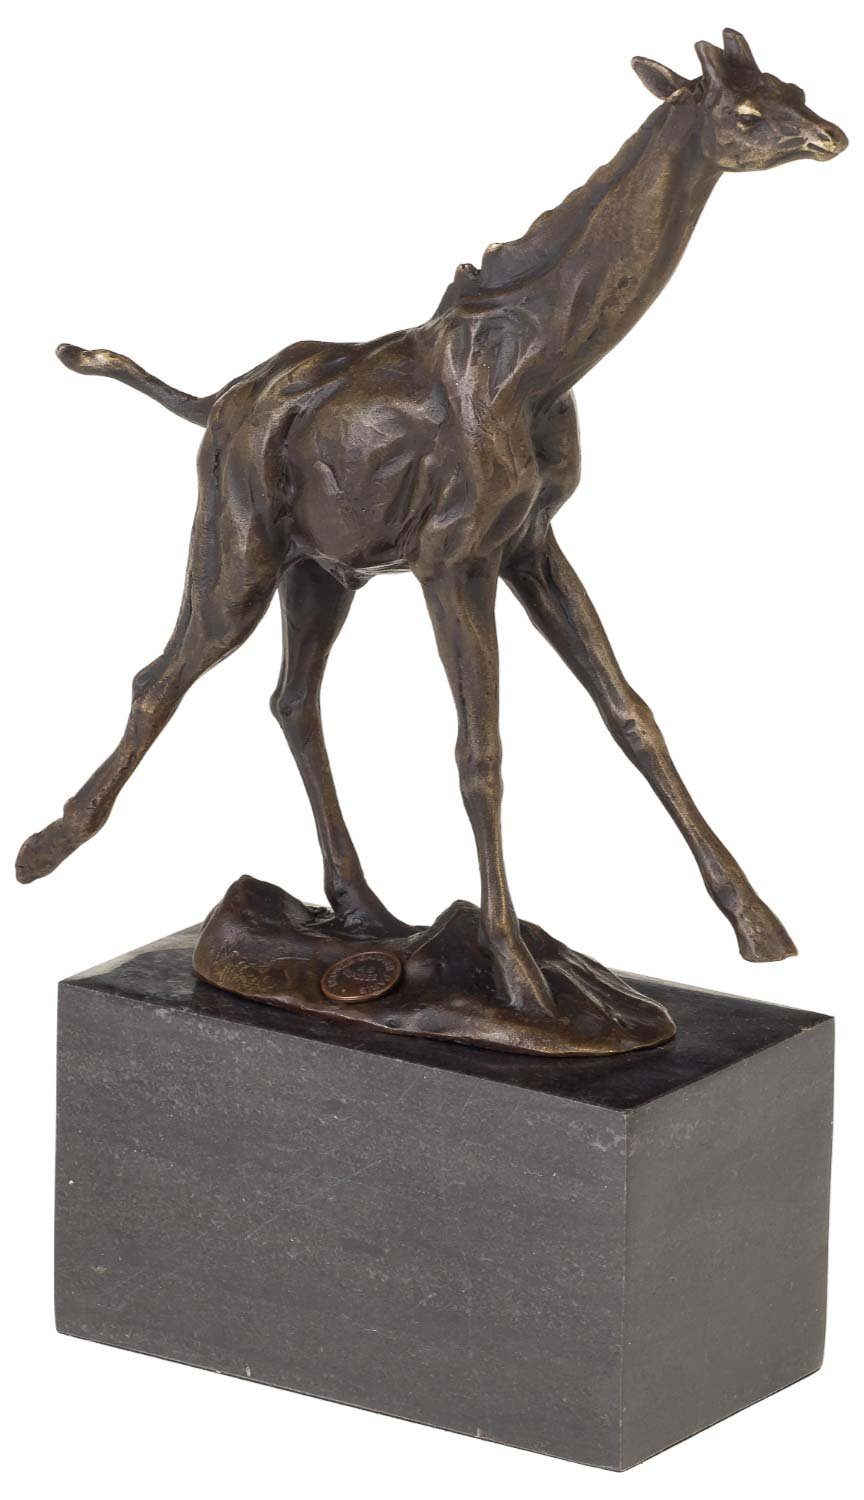 Aubaho Skulptur Bronzeskulptur Bronzeskulptur Bronze Giraffe Figur Statue im Antik-Sti